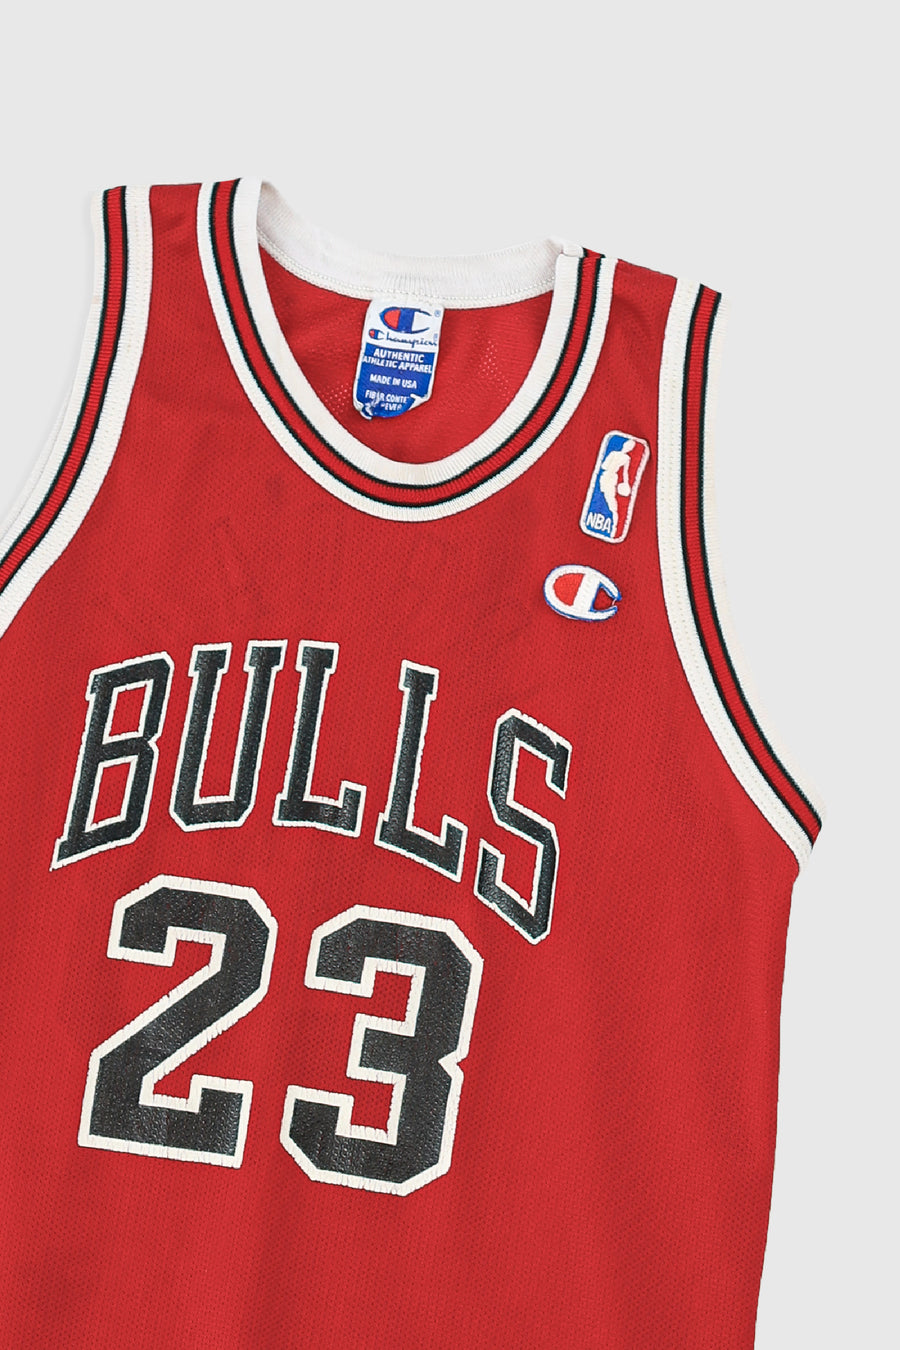 Vintage Bulls NBA Jersey - Women's XS